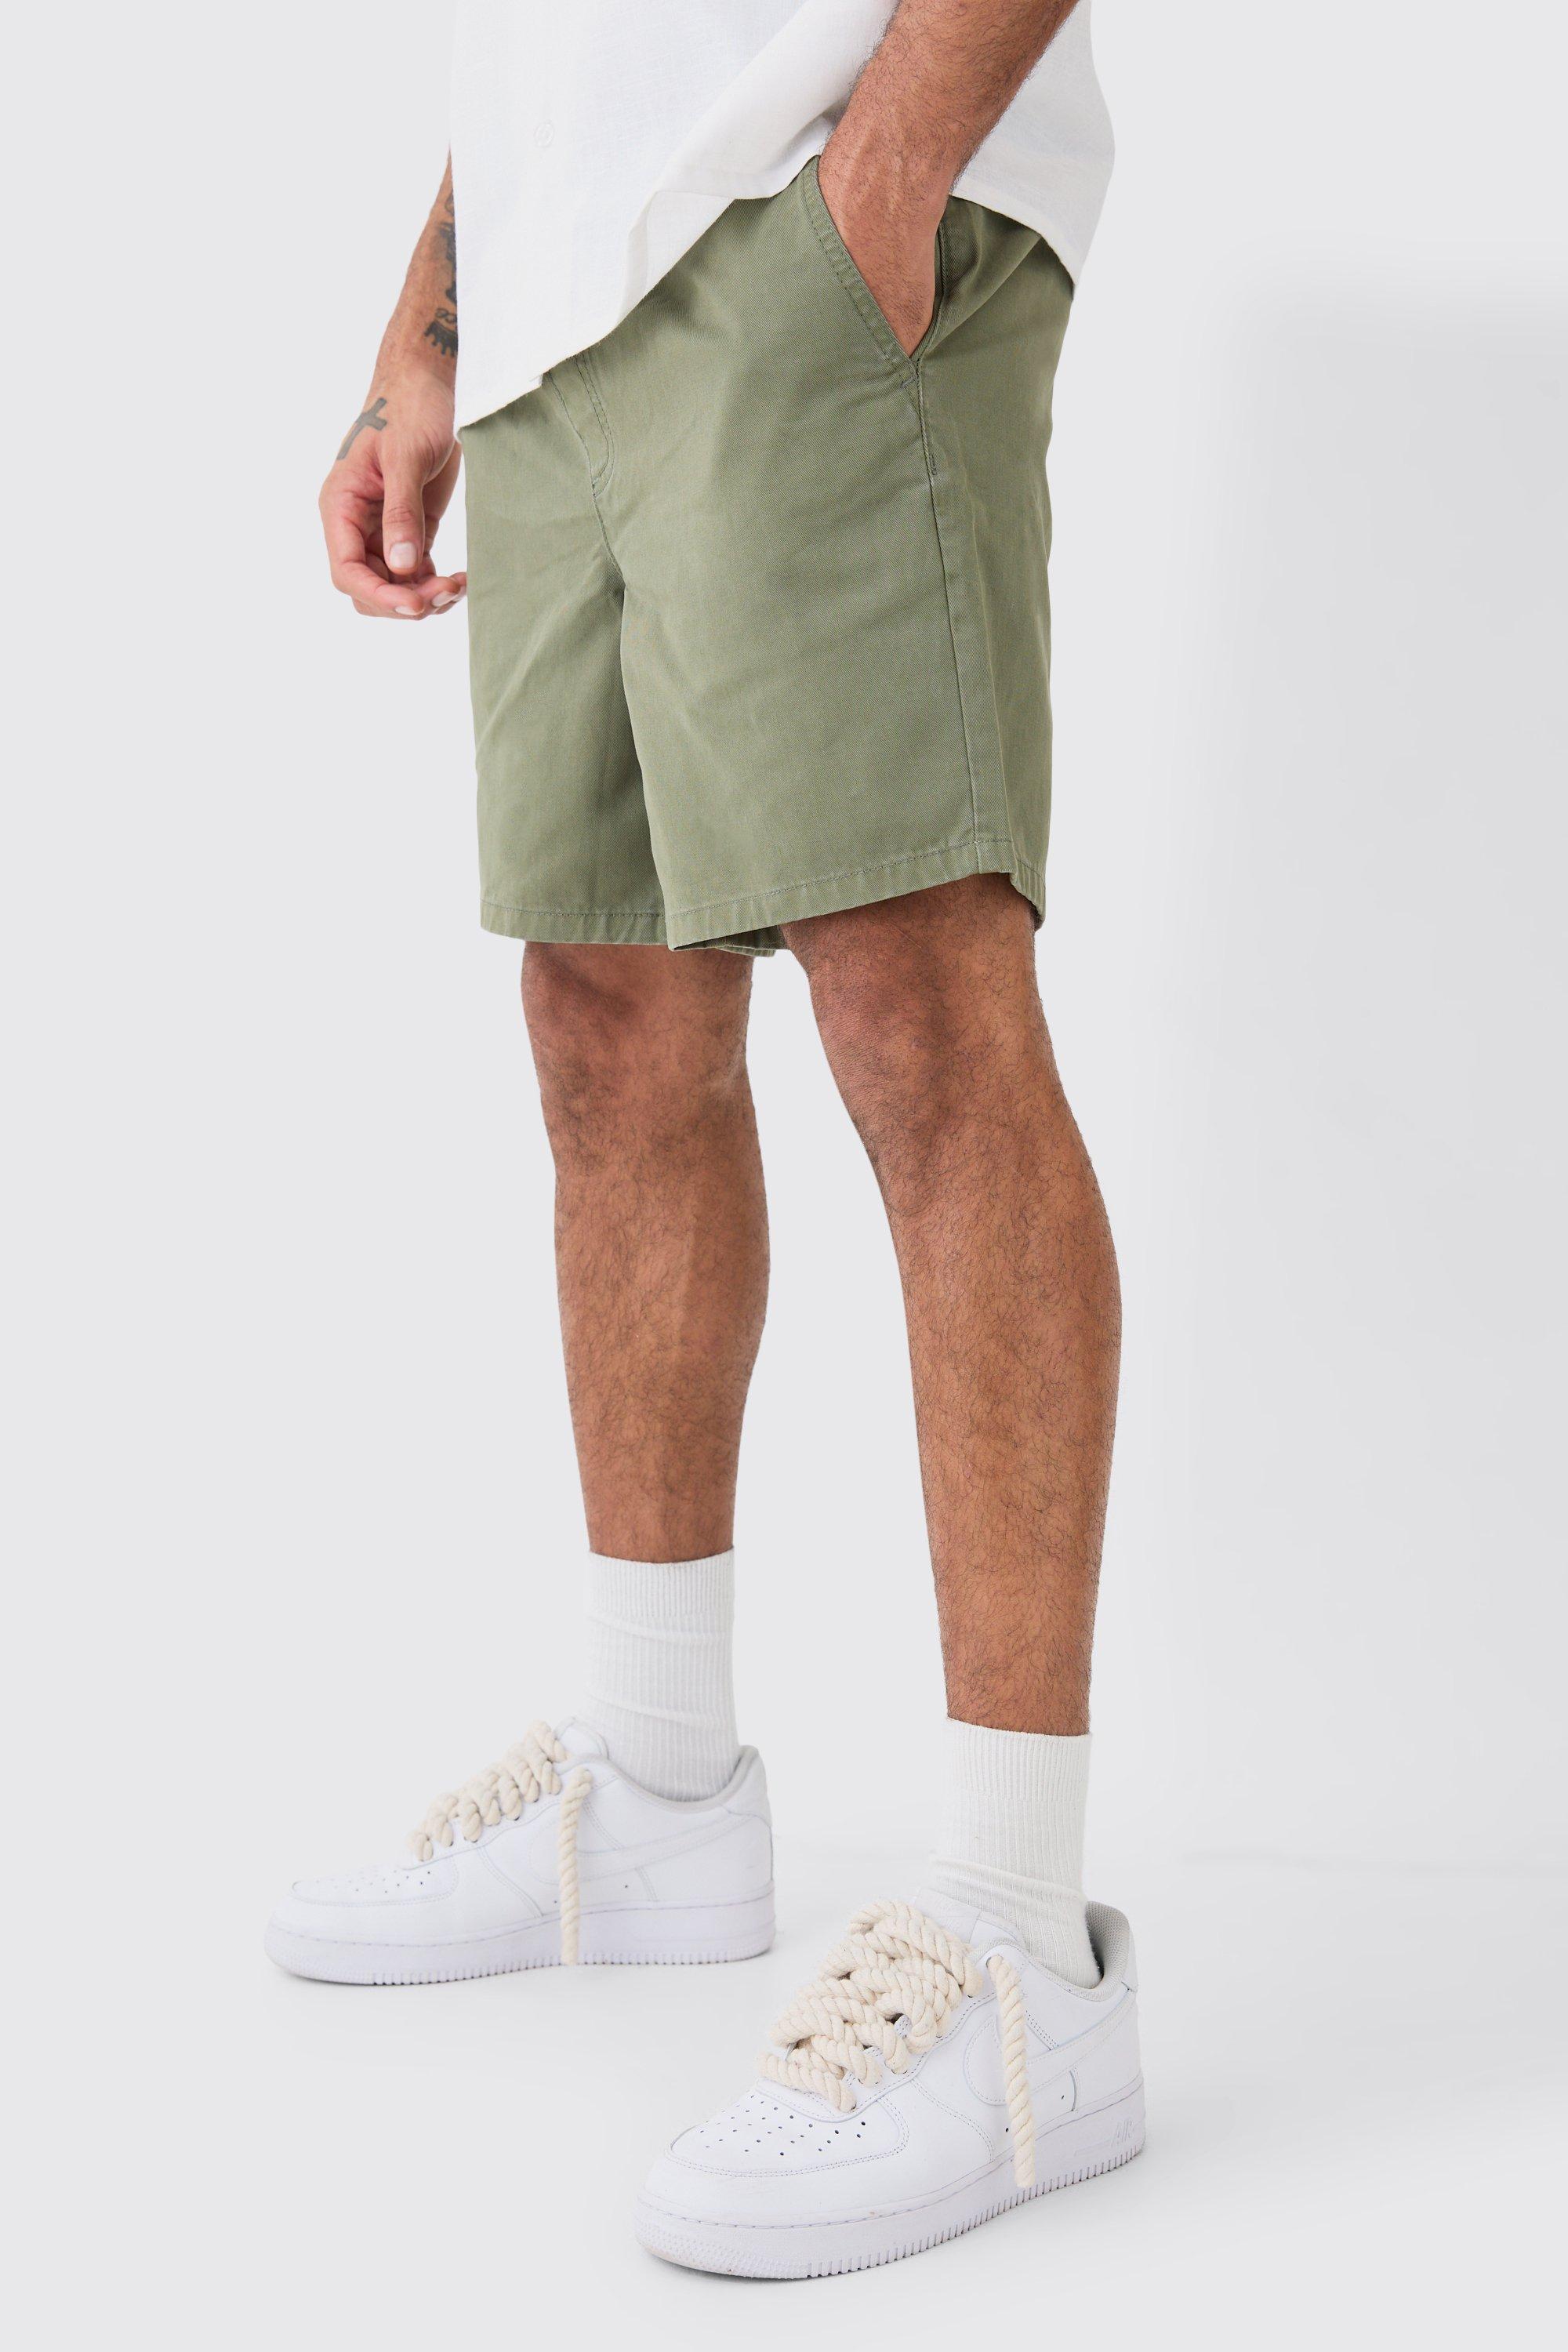 Image of Pantaloncini rilassati Everyday più corti color kaki, Verde